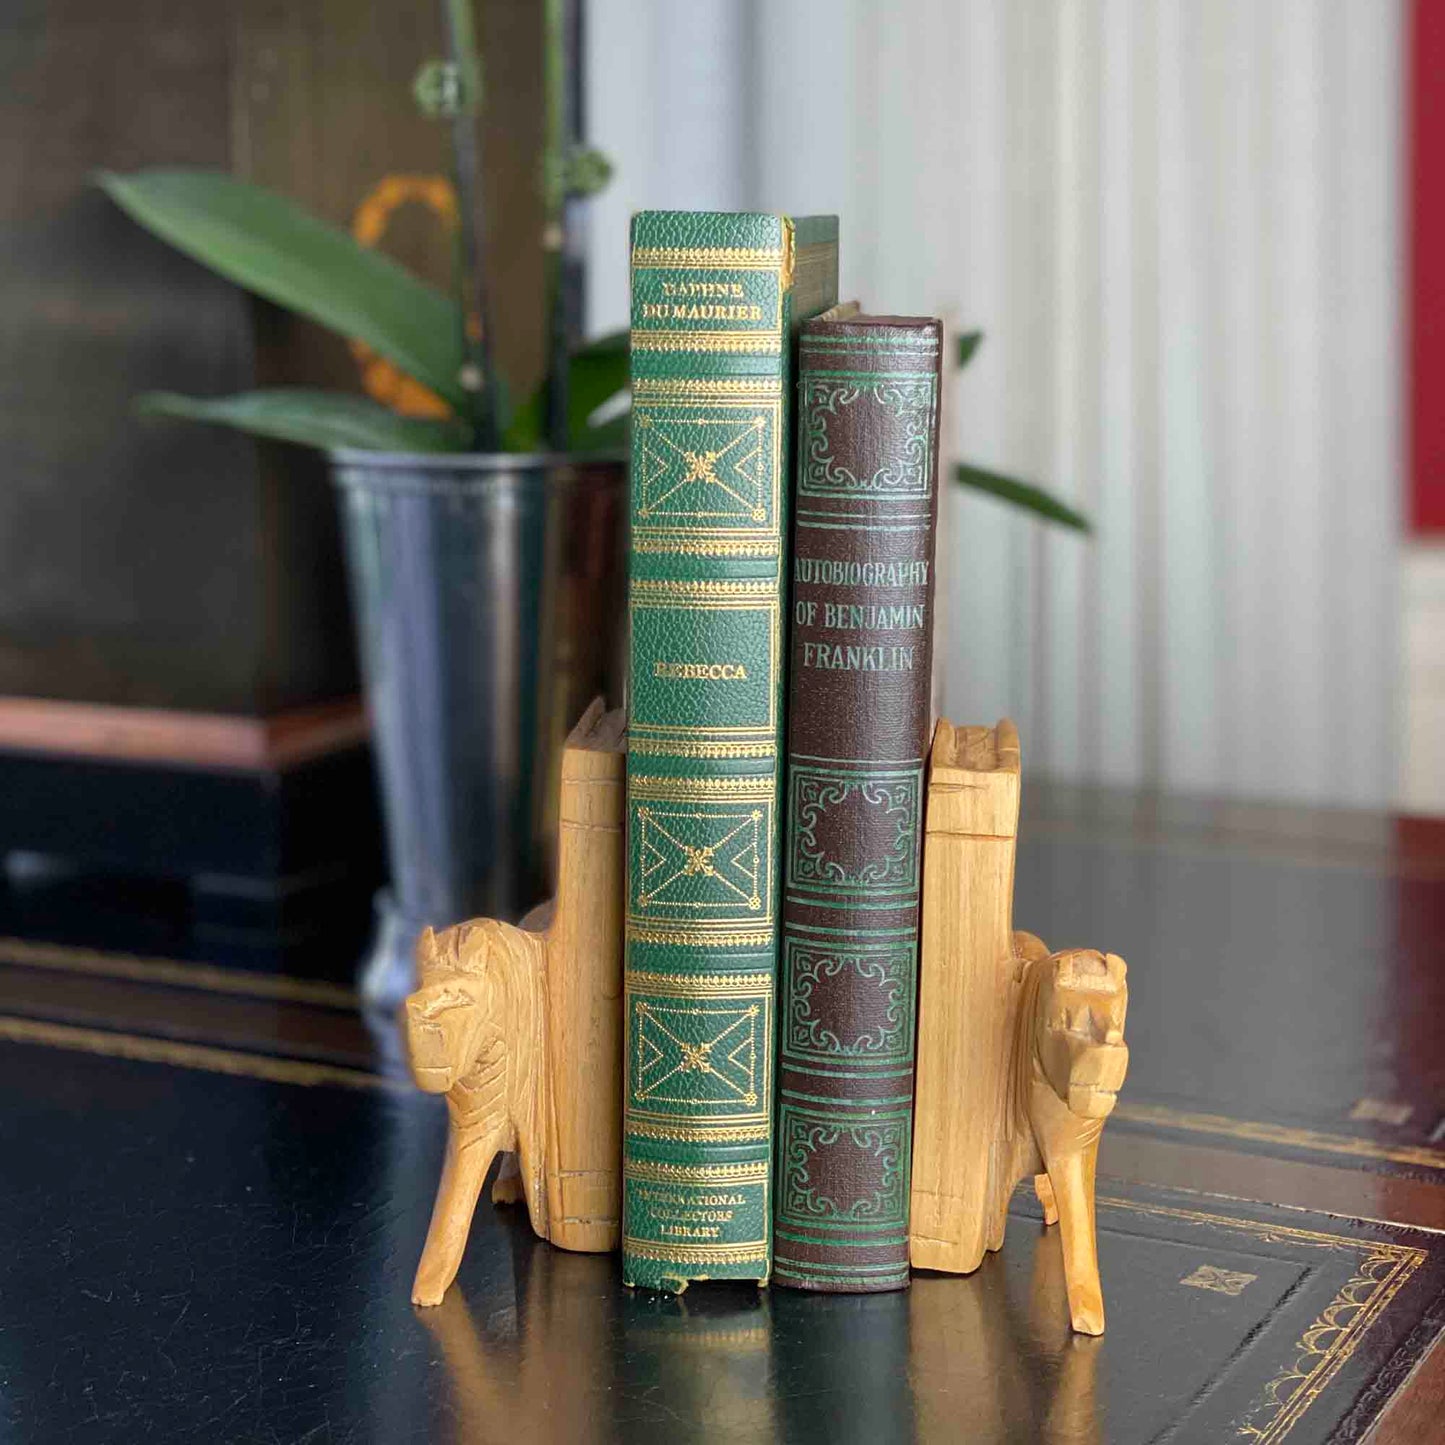 Jedando Handicrafts Carved Wood Lion Book Ends